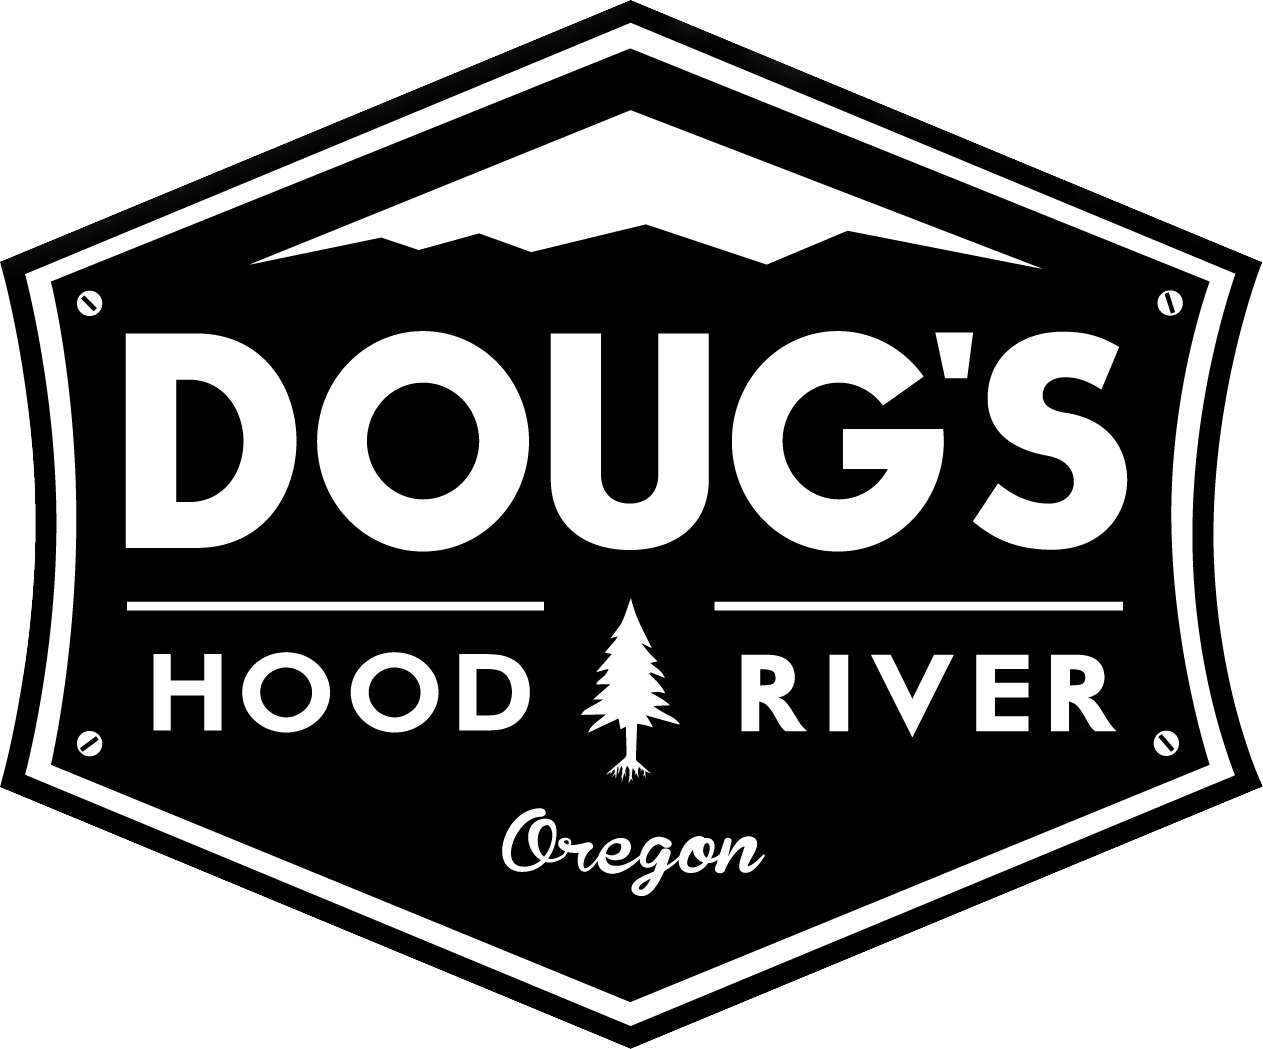 Doug's Hood River